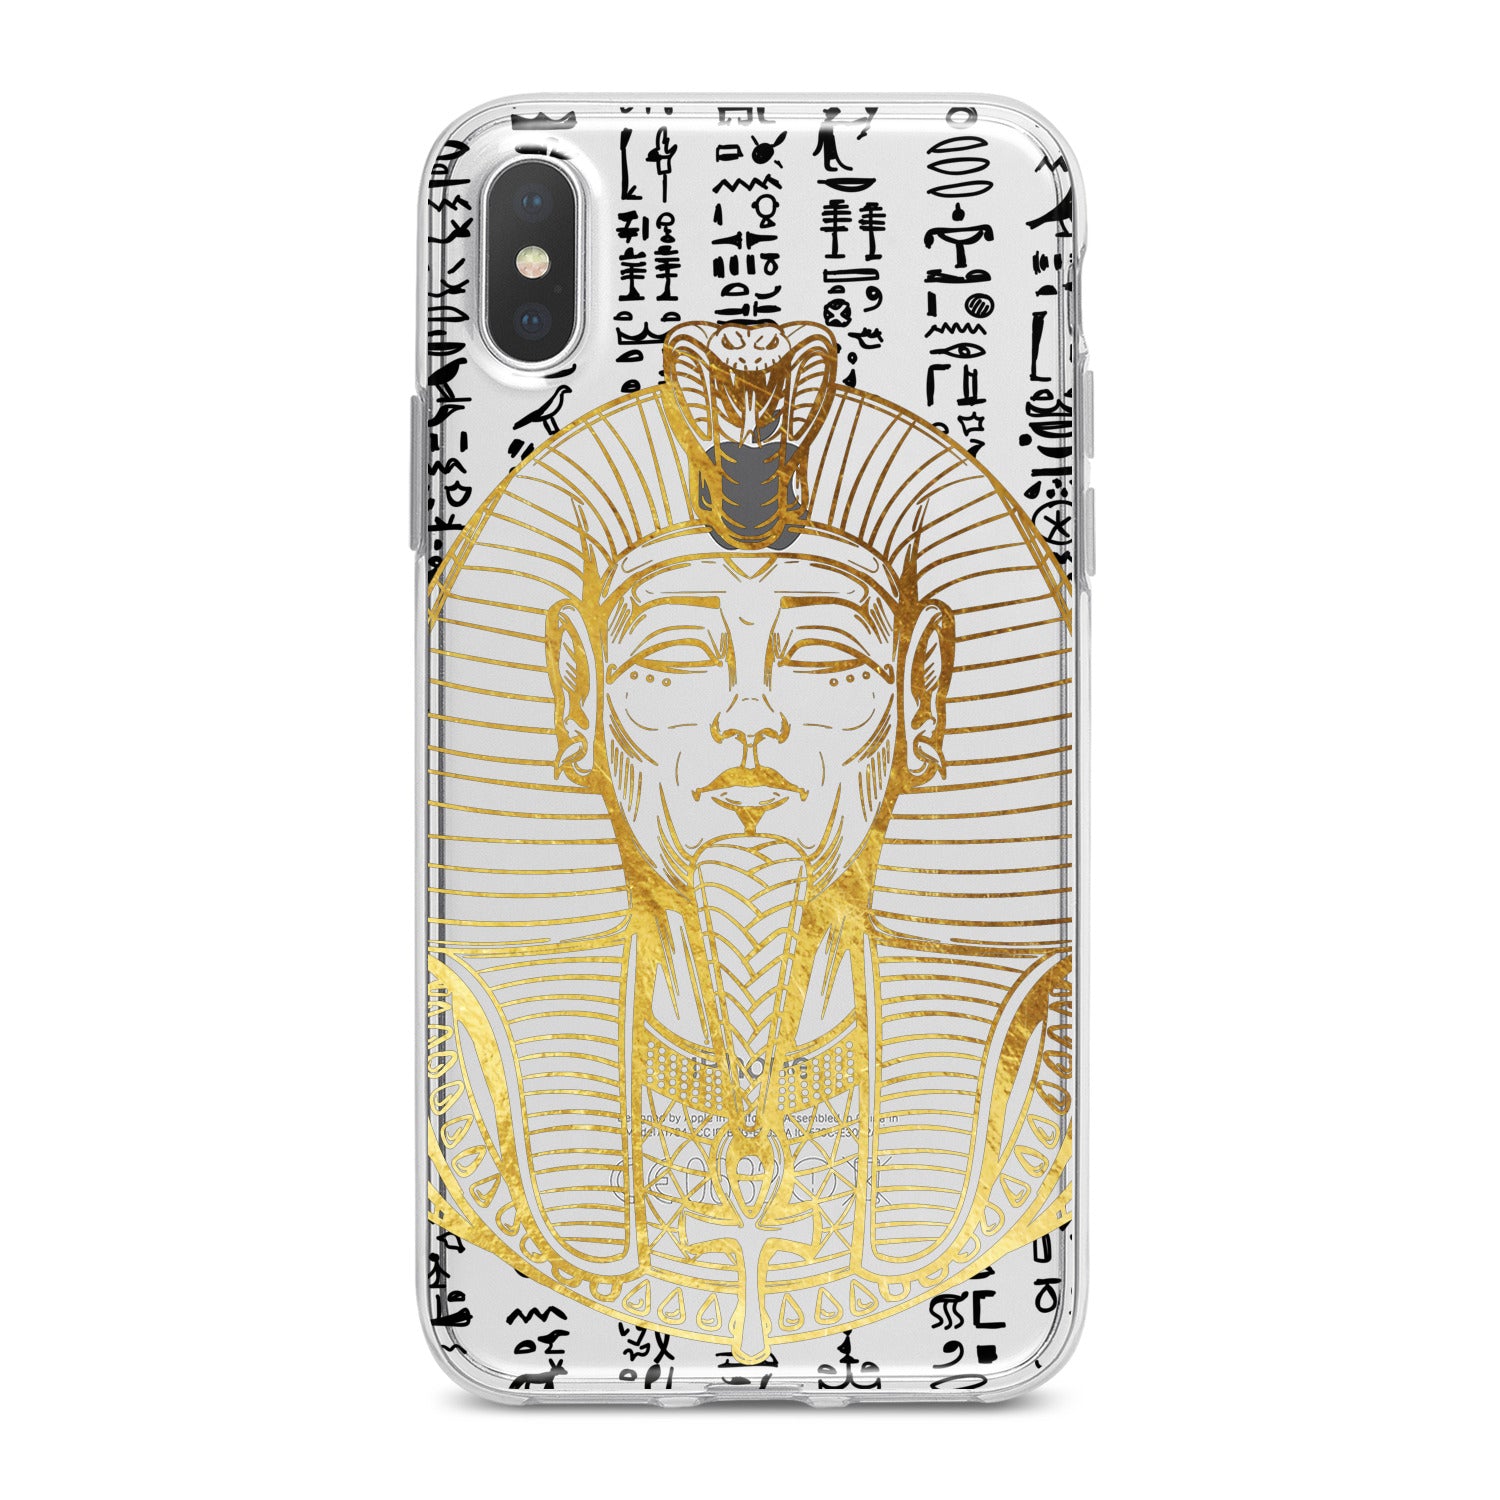 Lex Altern Tutankhamun Art Phone Case for your iPhone & Android phone.